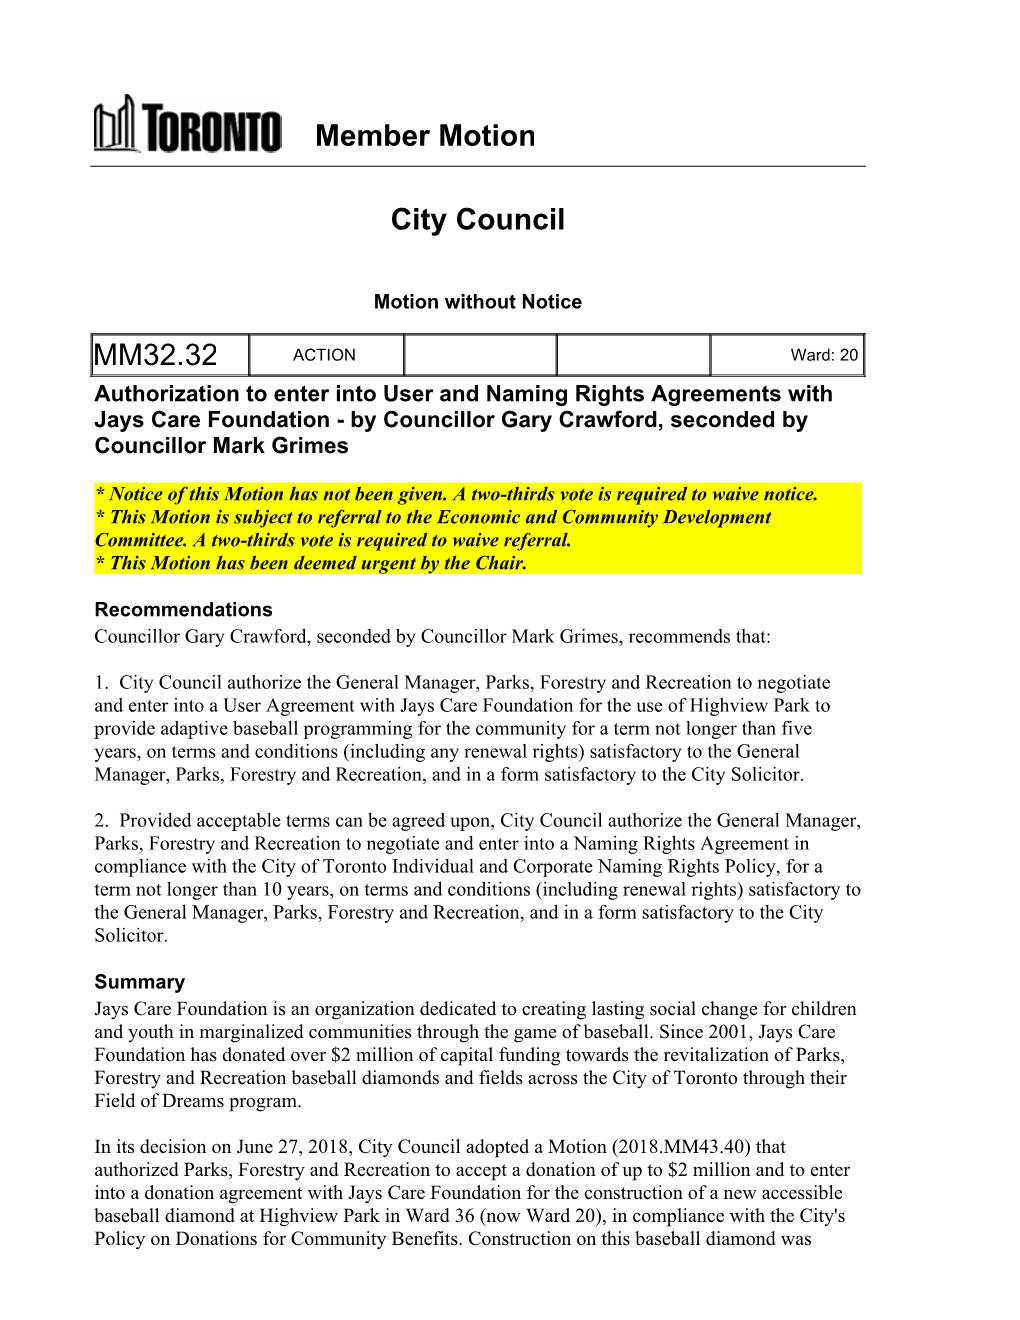 Member Motion City Council MM32.32